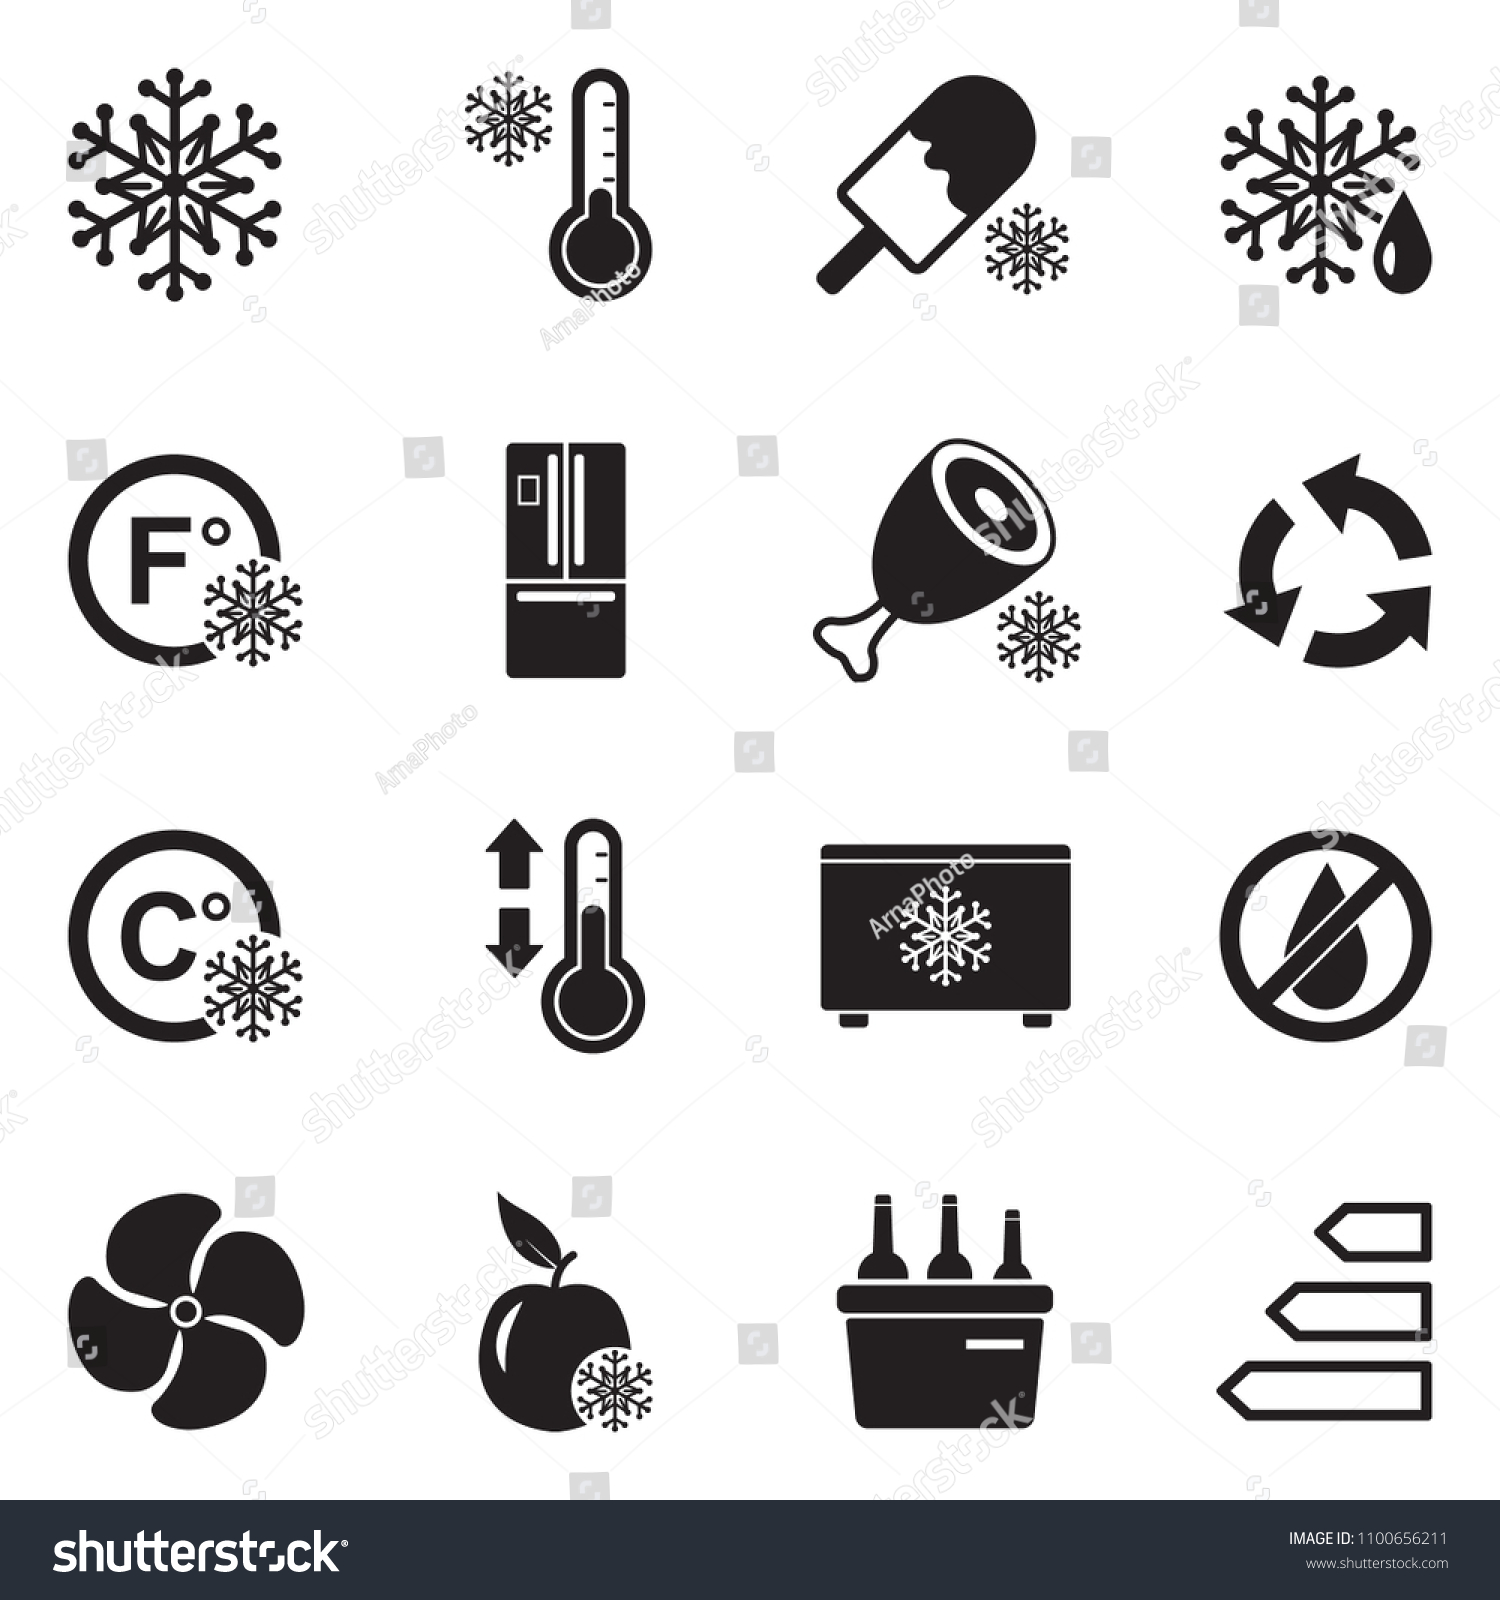 SVG of Refrigerator Icons. Black Flat Design. Vector Illustration.  svg